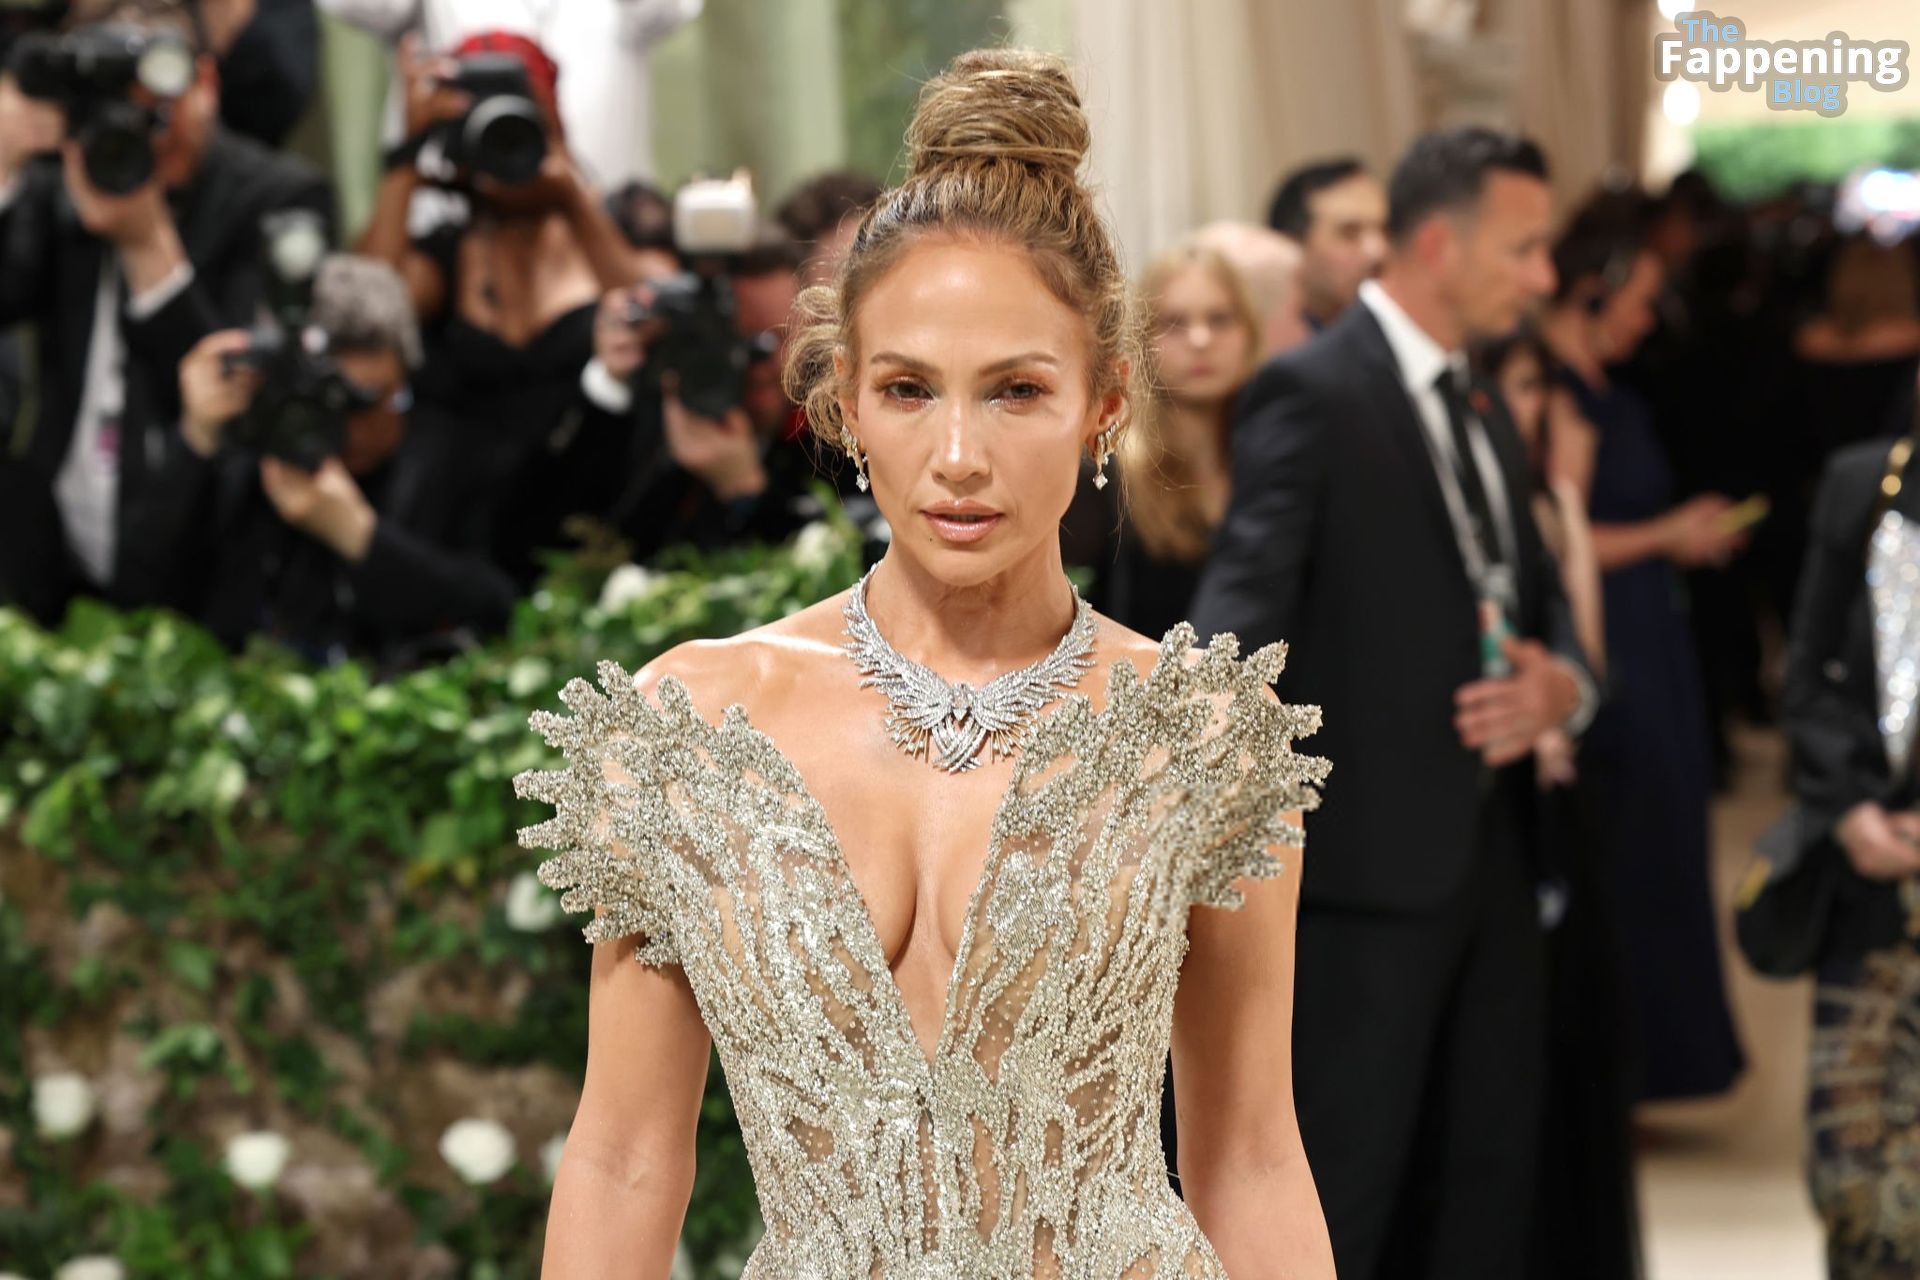 Jennifer-Lopez-Hot-60-The-Fappening-Blog.jpg